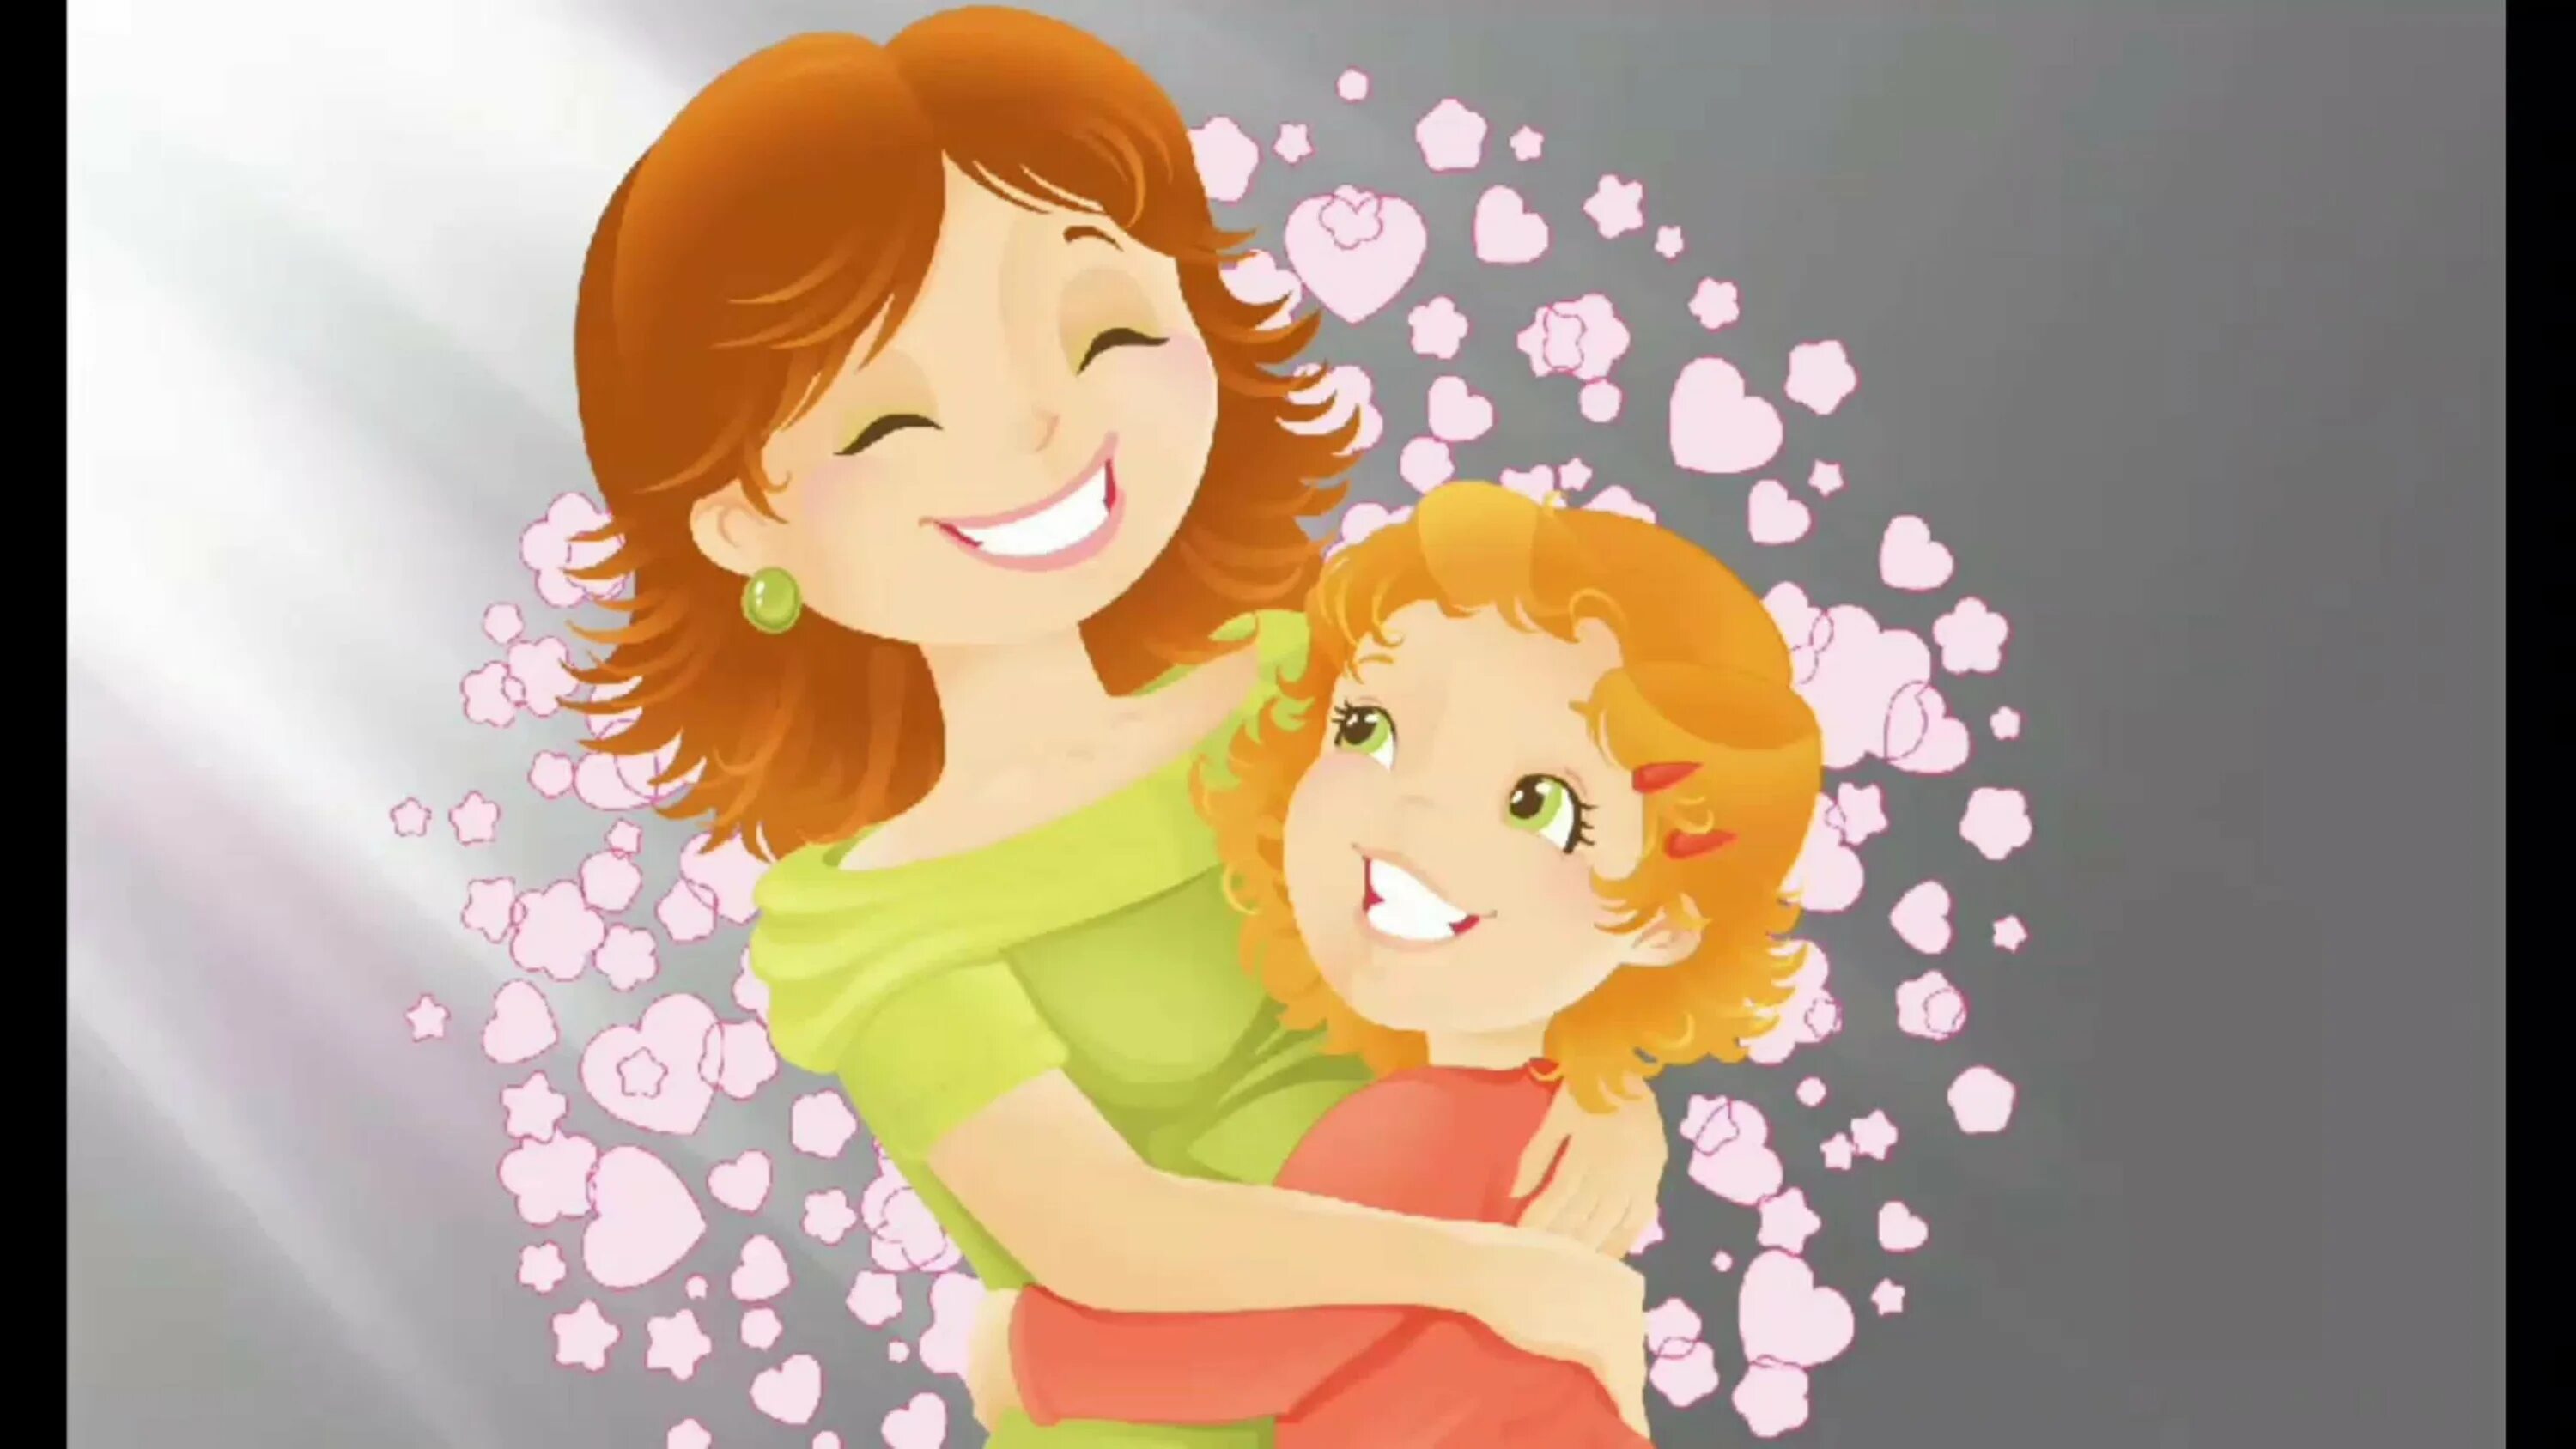 День матери. Мама и ребенок иллюстрация. С днём матери картинки. Рисунок ко Дню матери.